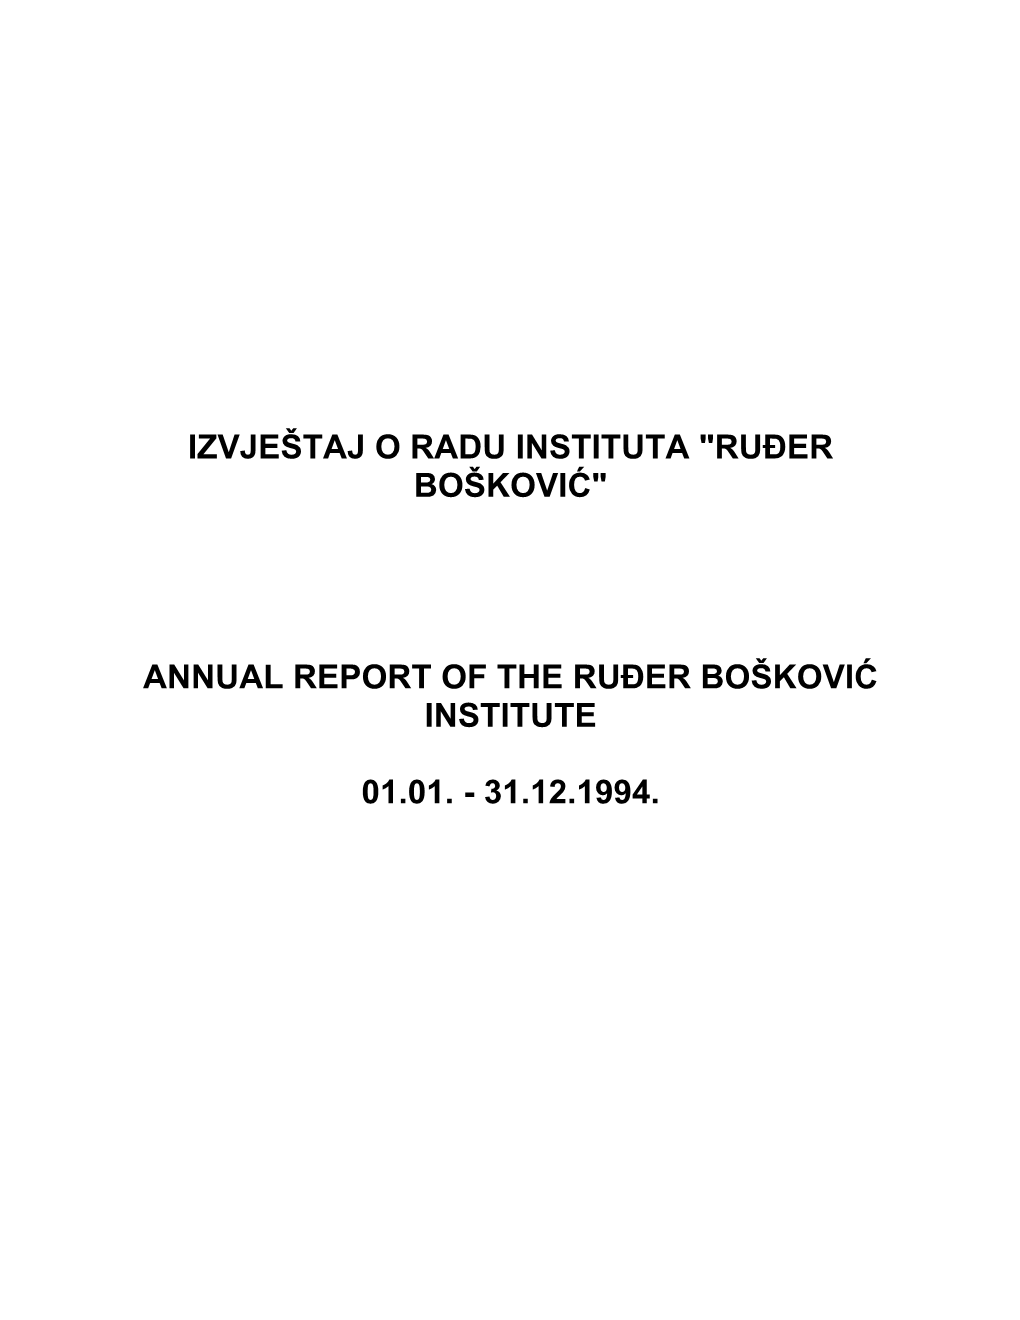 Annual Report of the Ruđer Bošković Institute 01.01